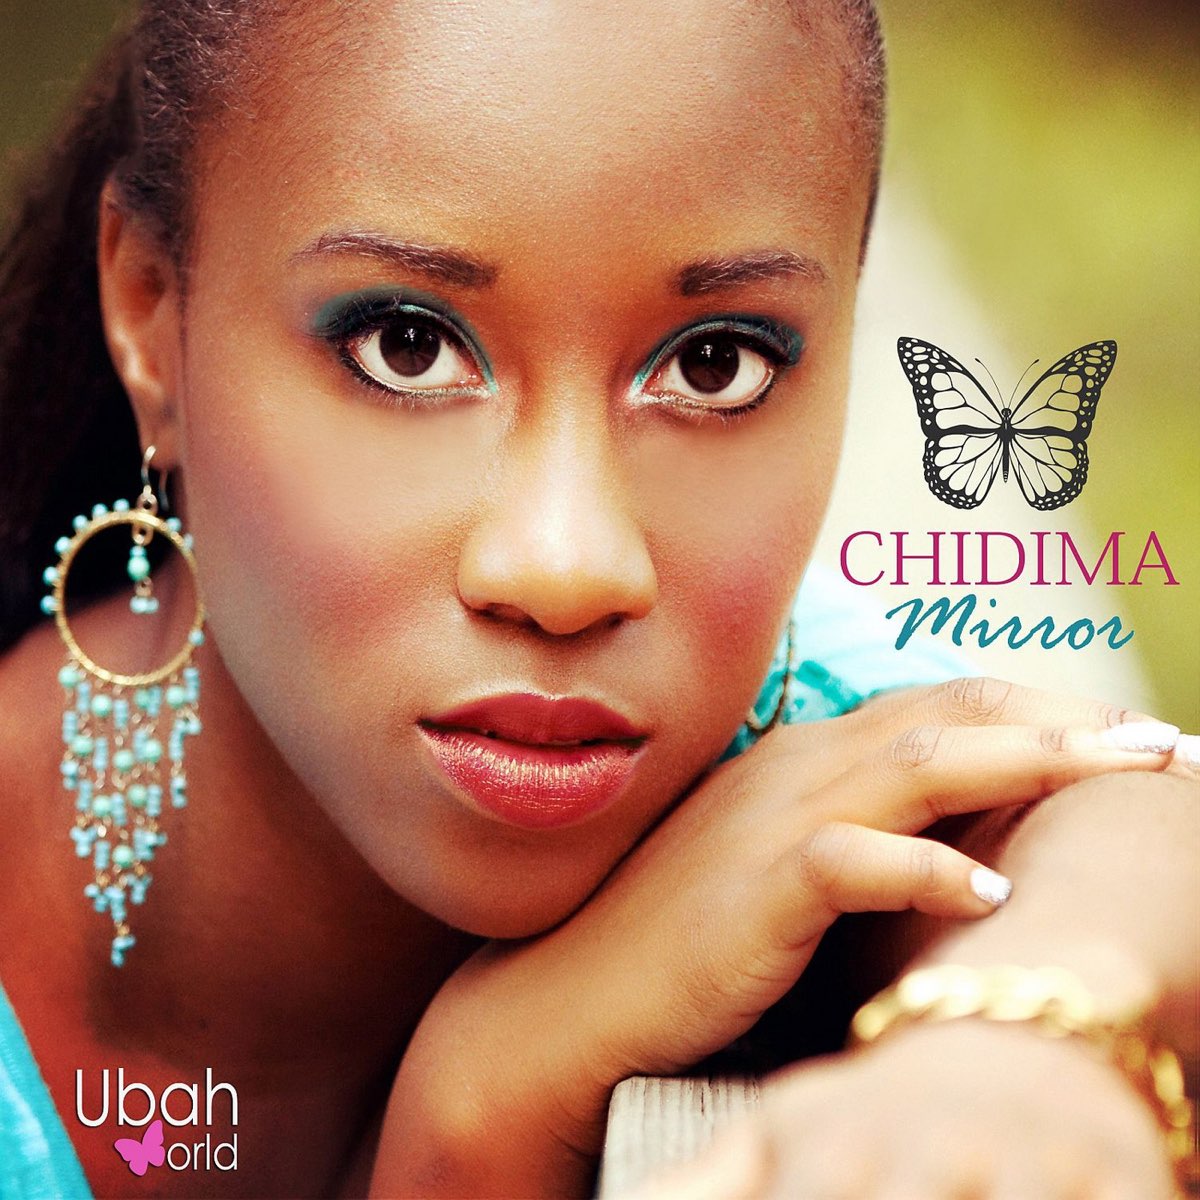 Mirror - Single by Chidima Ubah on Apple Music